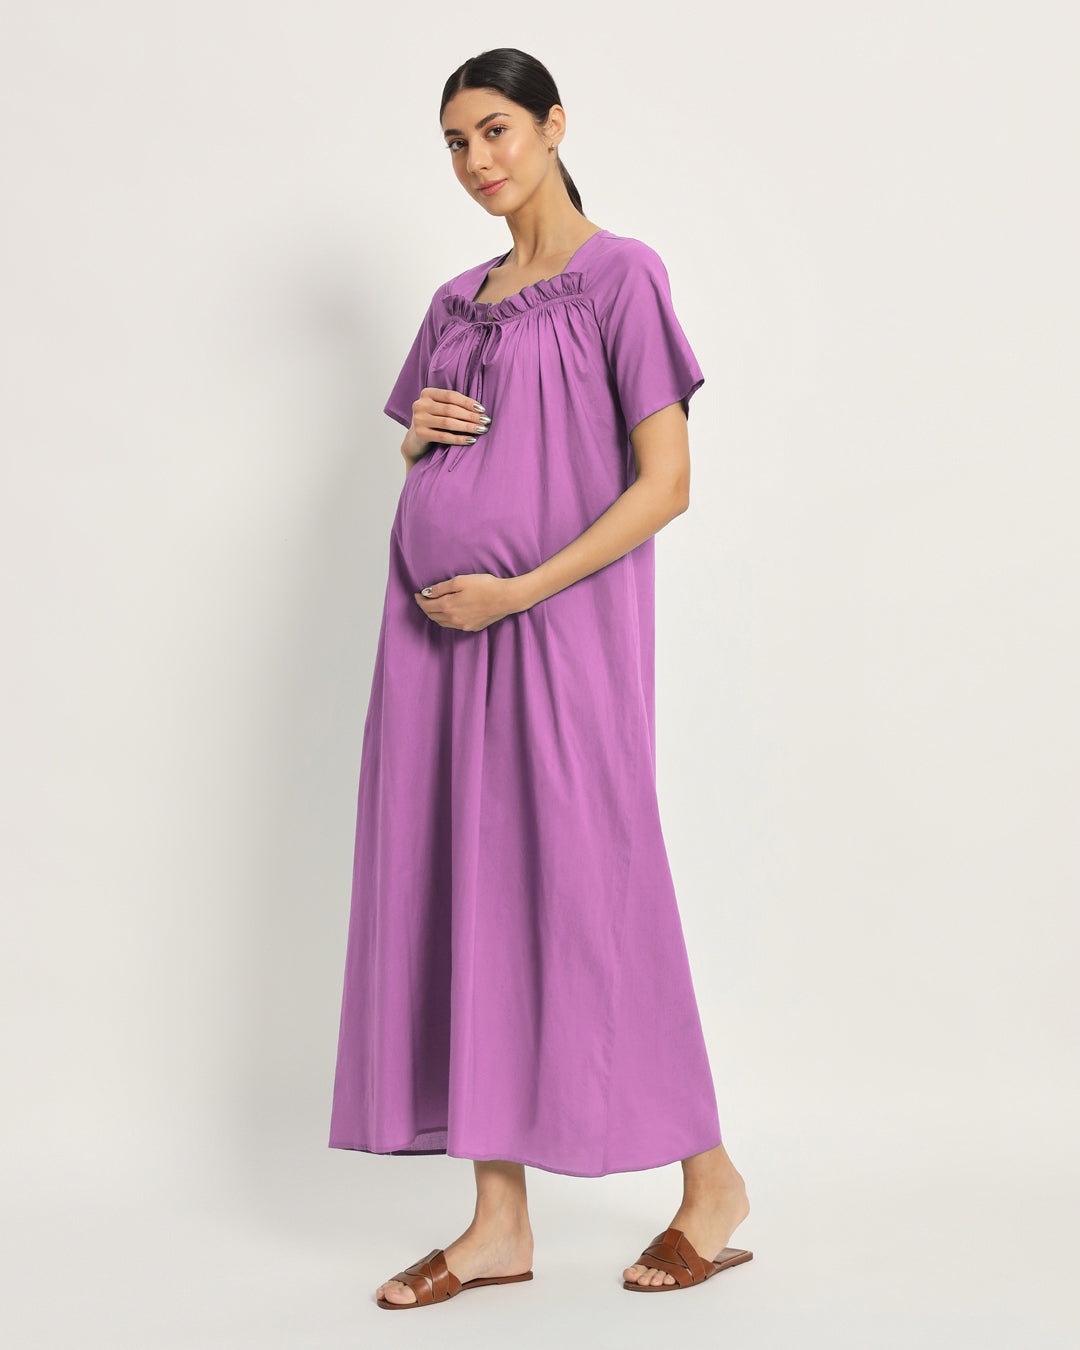 Combo: Sage Green & Wisteria Purple Nurture N' Shine Maternity & Nursing Dress